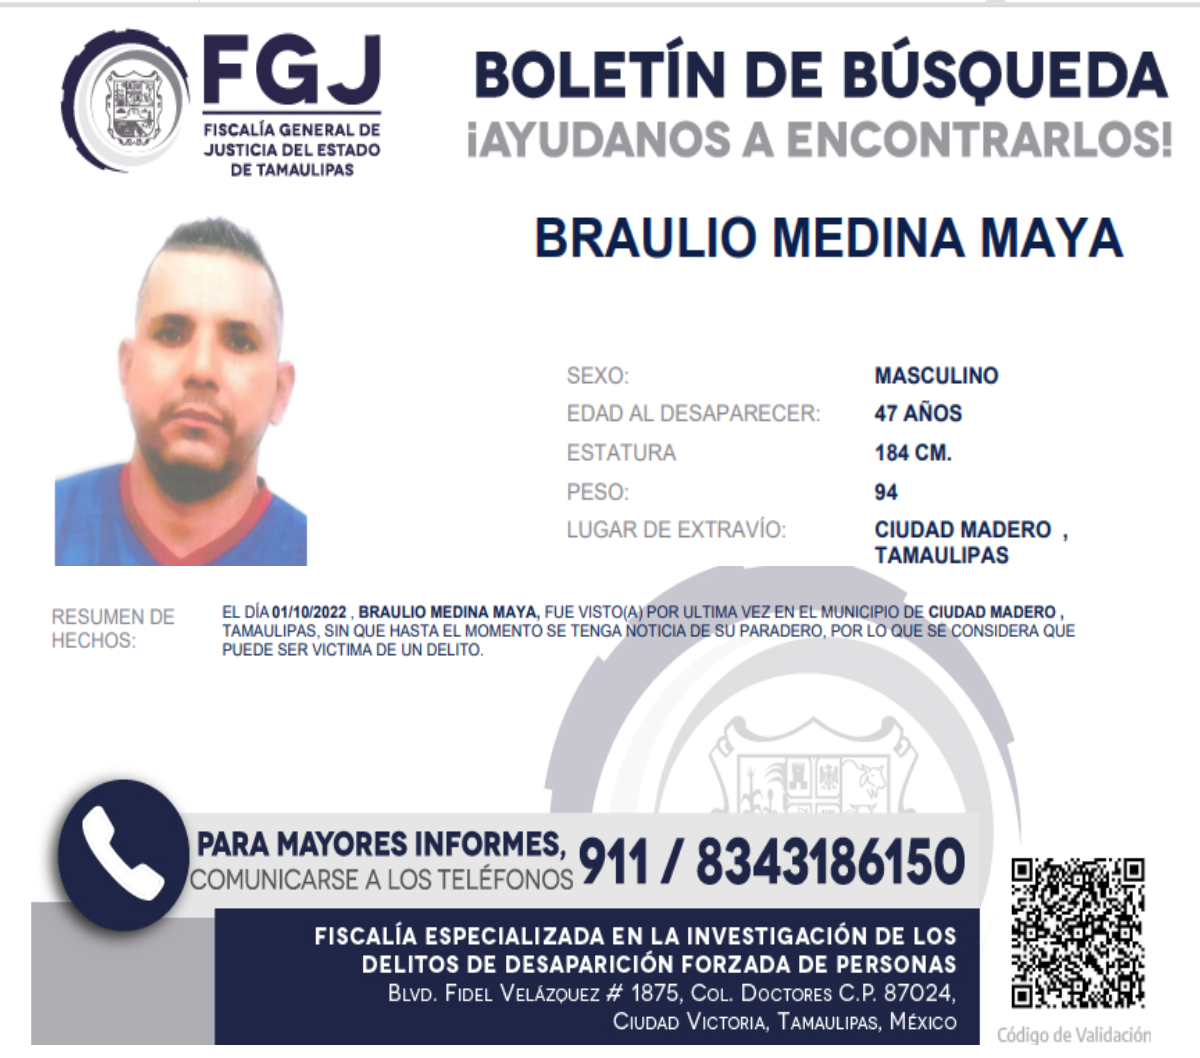 Boletin de Busqueda Braulio Medina